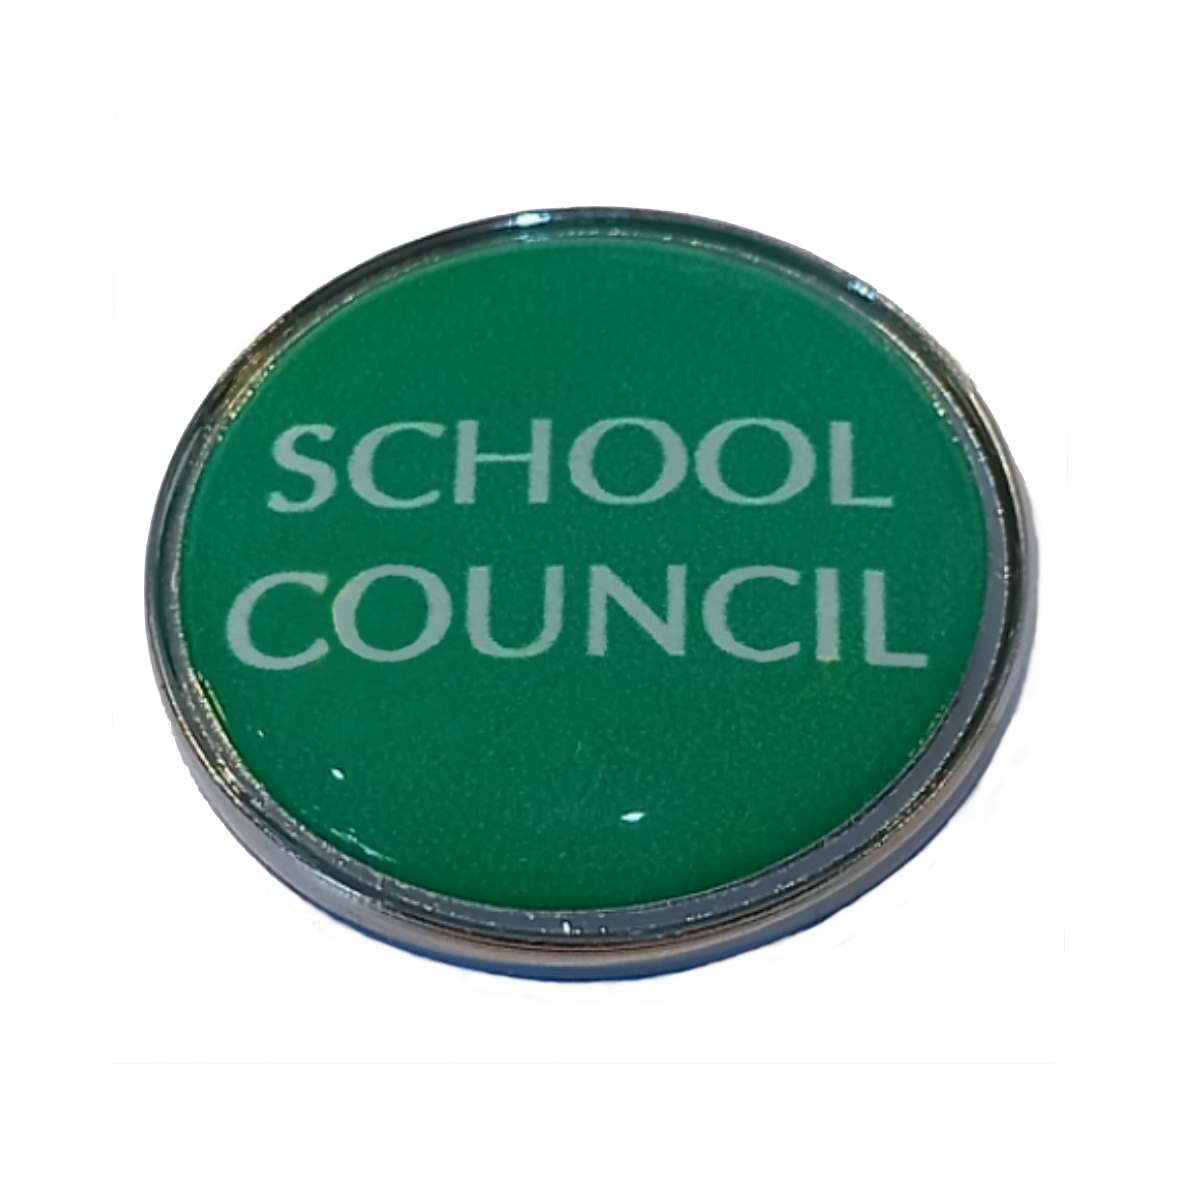 SCHOOL COUNCIL round GREEN